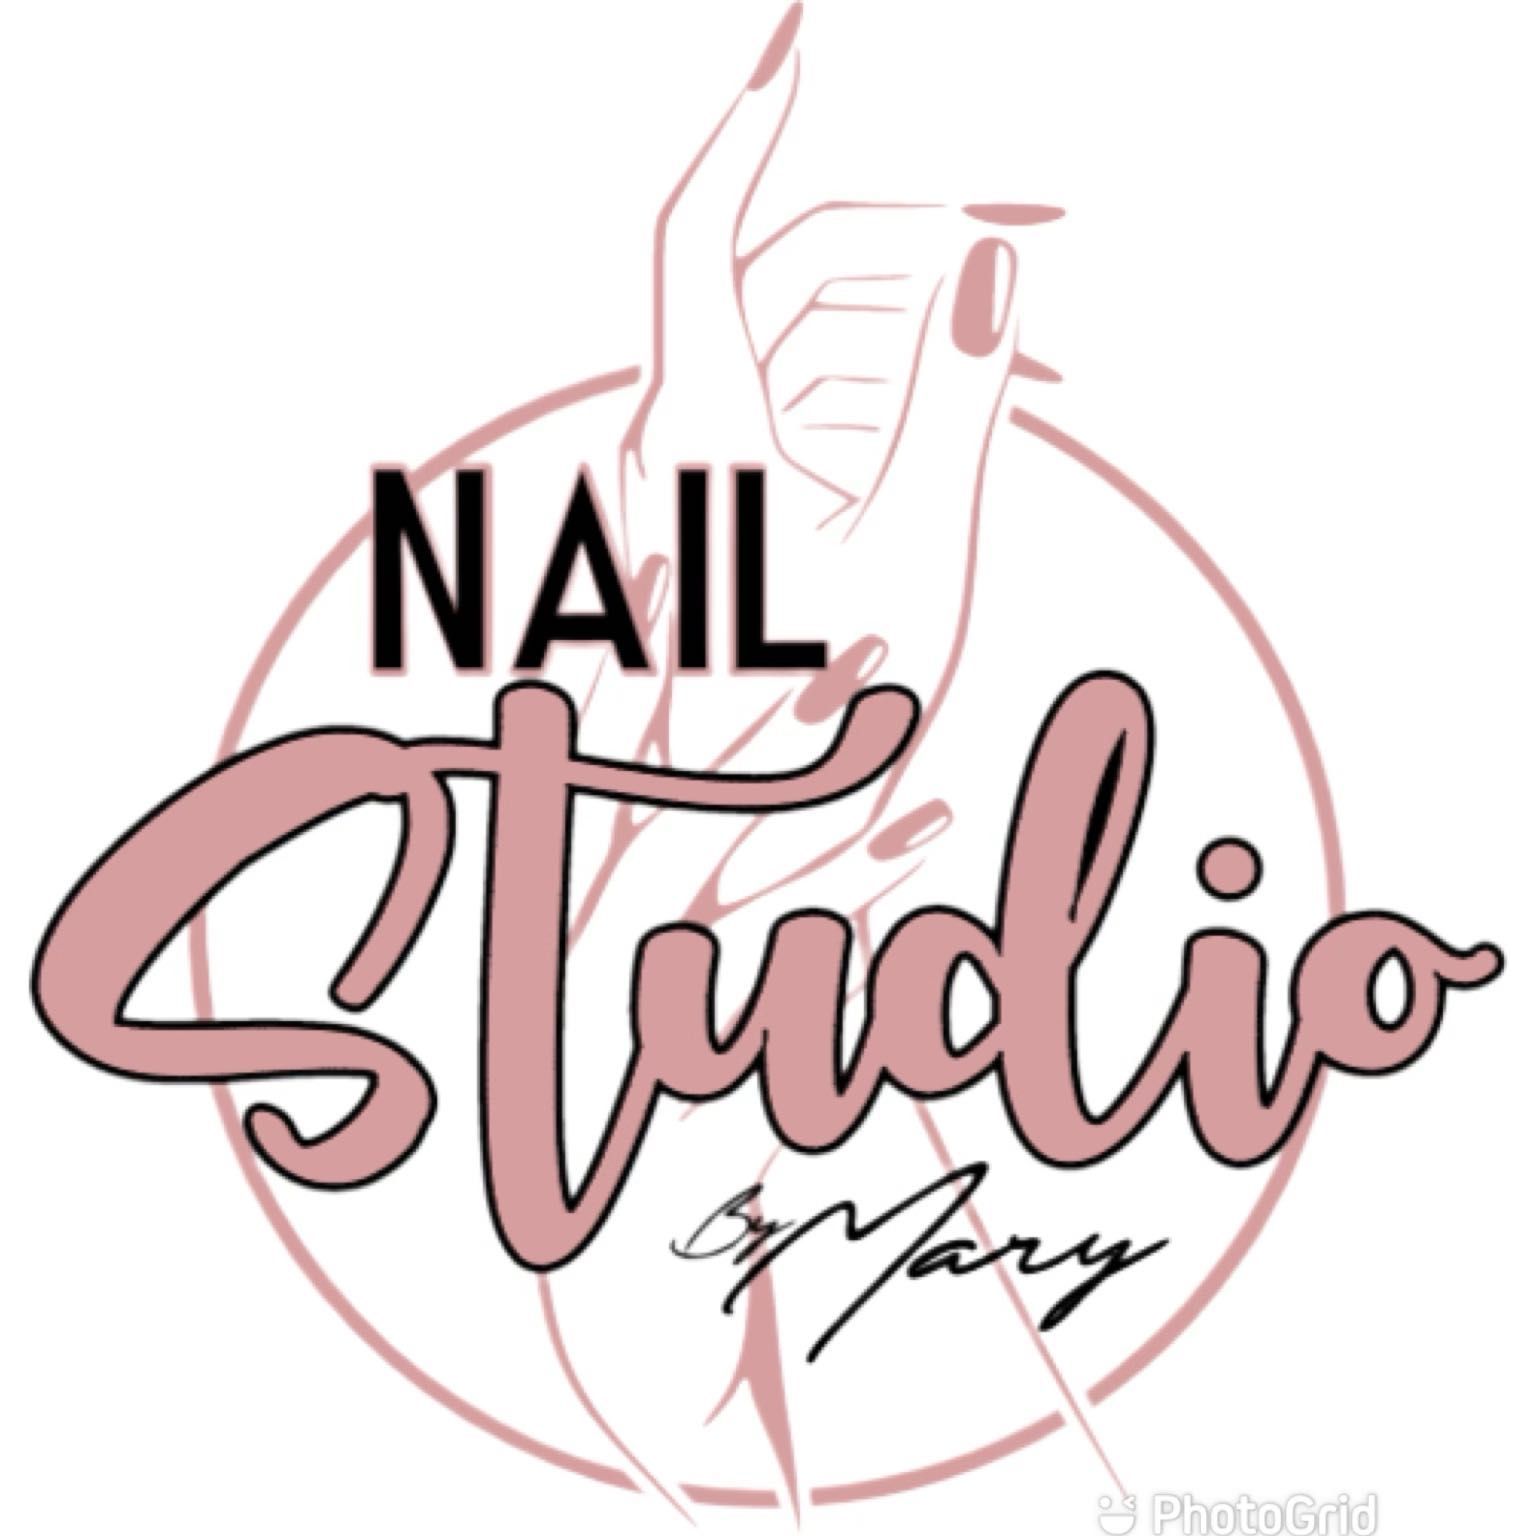 Nail Studio By Mary, 27 Martin St, Apt 2, Southbridge, 01550